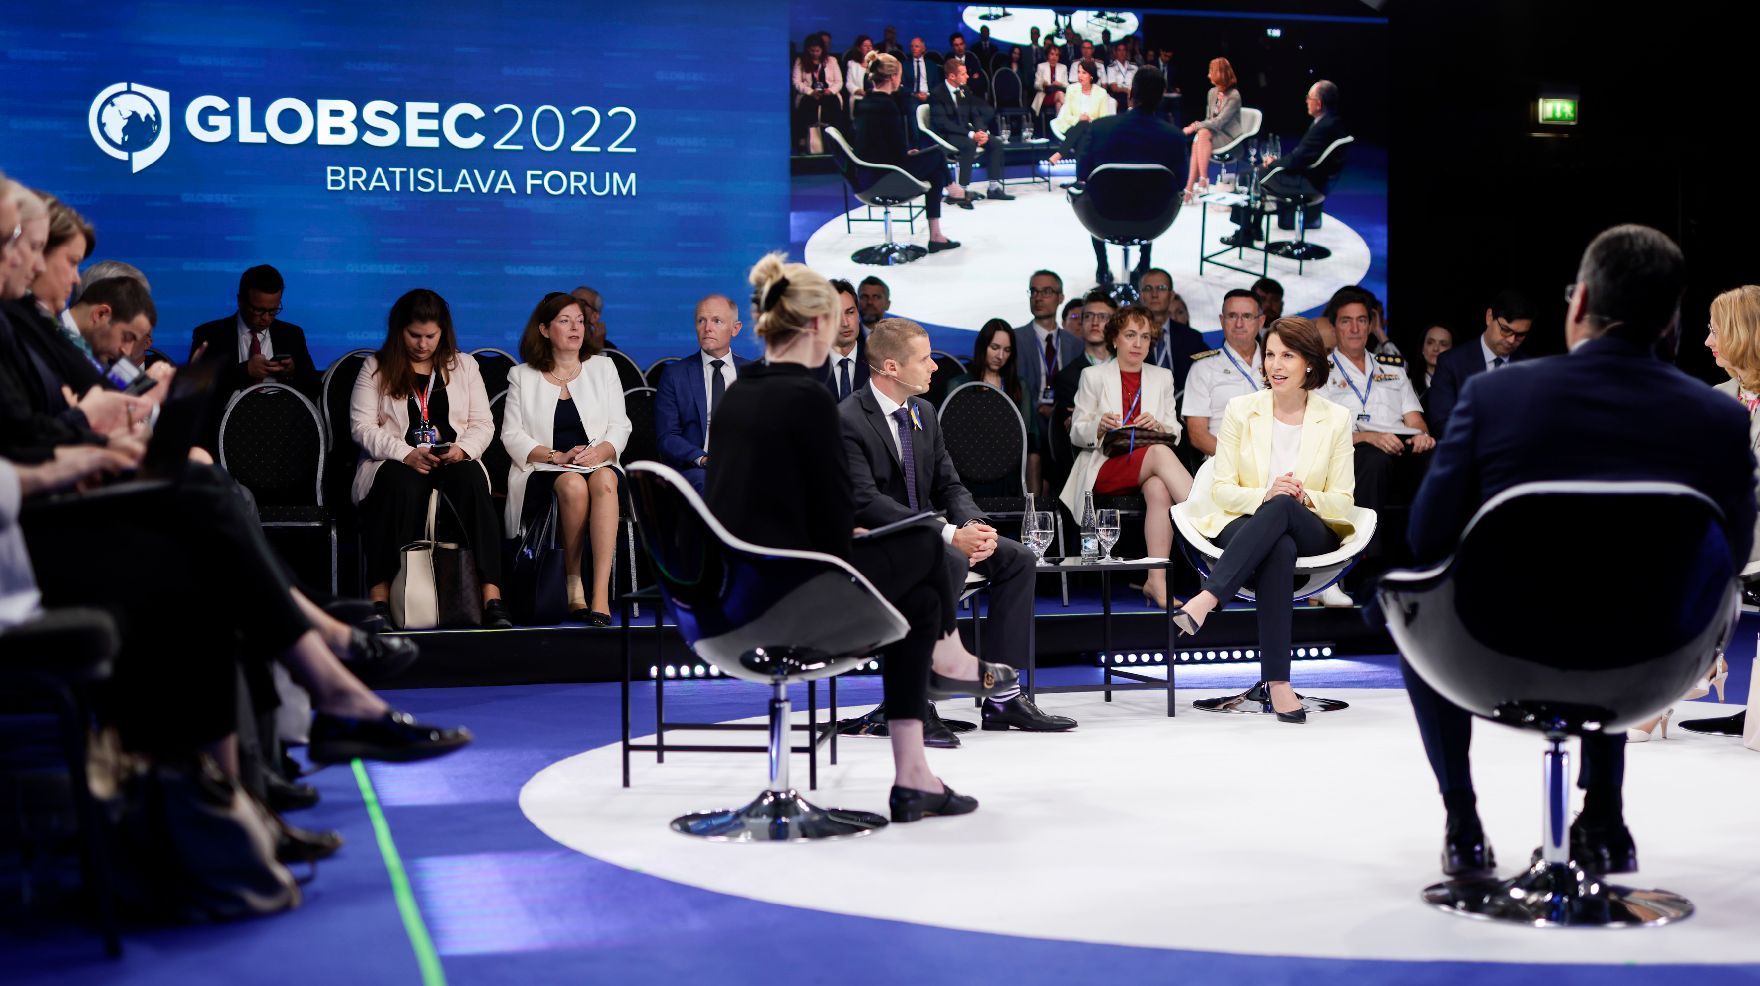 Am 3. Mai 2022 reiste Bundesministerin Karoline Edtstadler zum GLOBSEC2022 Forum in Bratislava. Im Bild bei der Paneldiskussion.